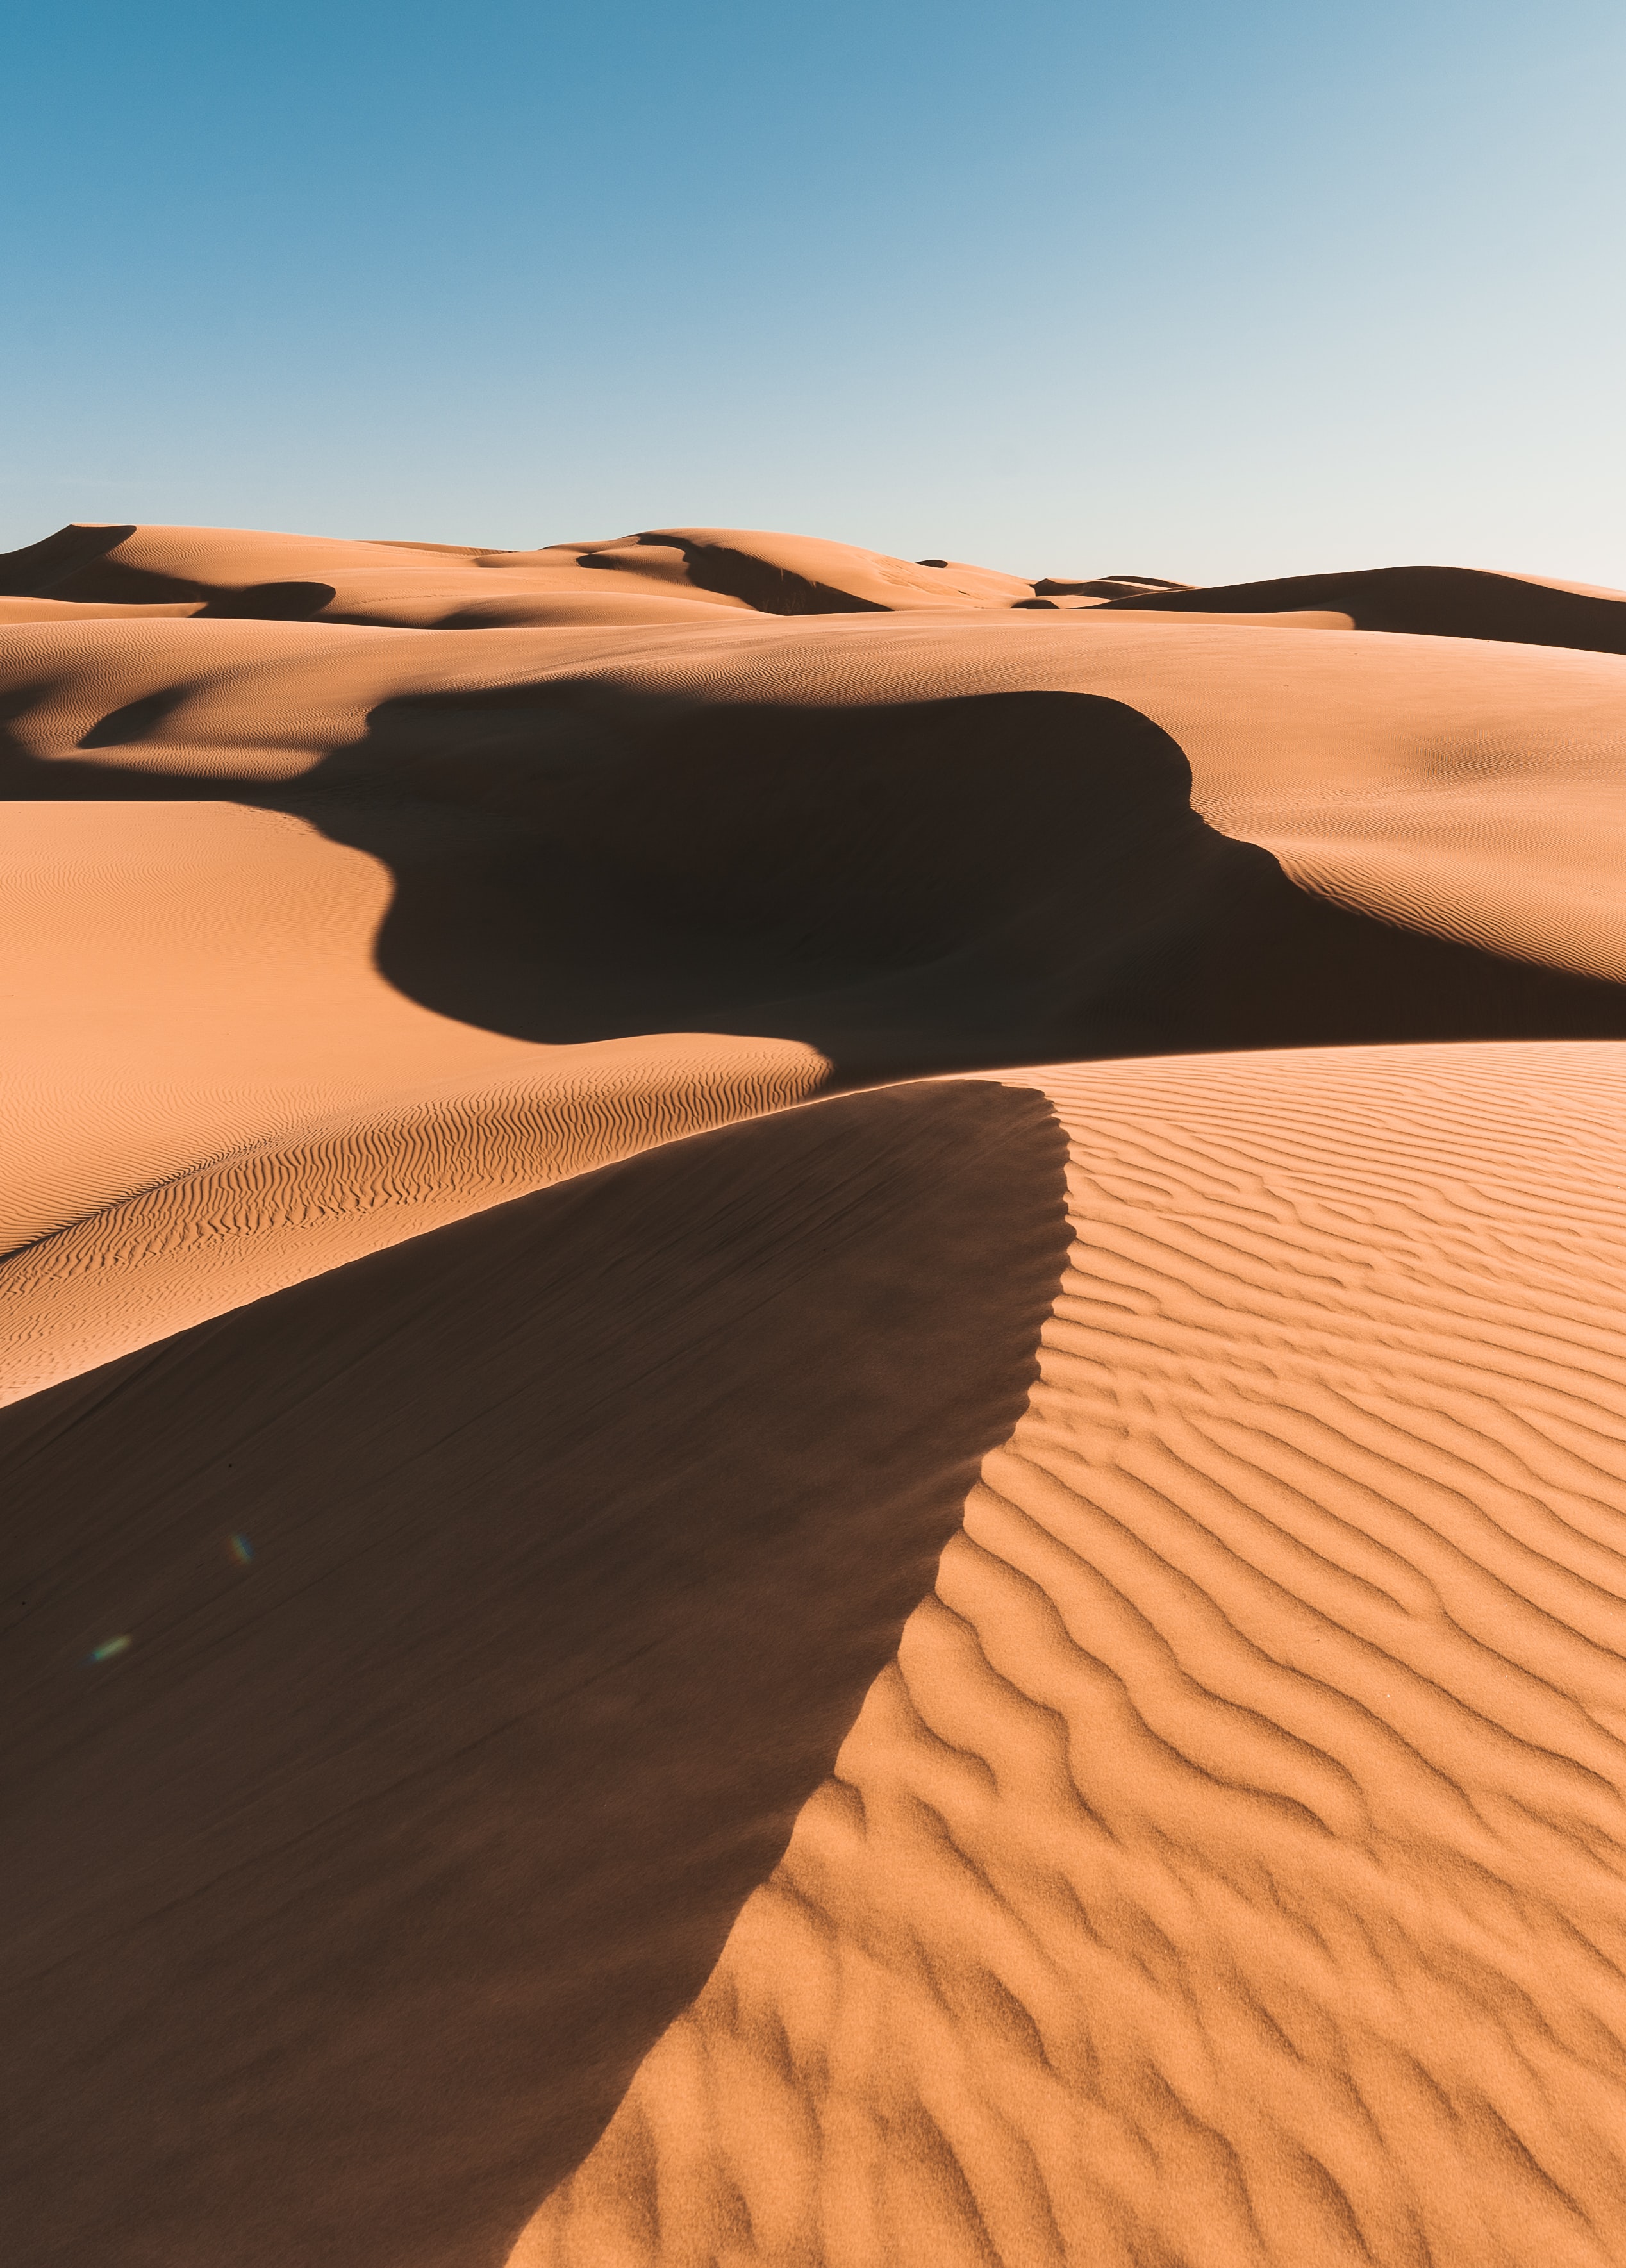 Best Desert Desktop Backgrounds